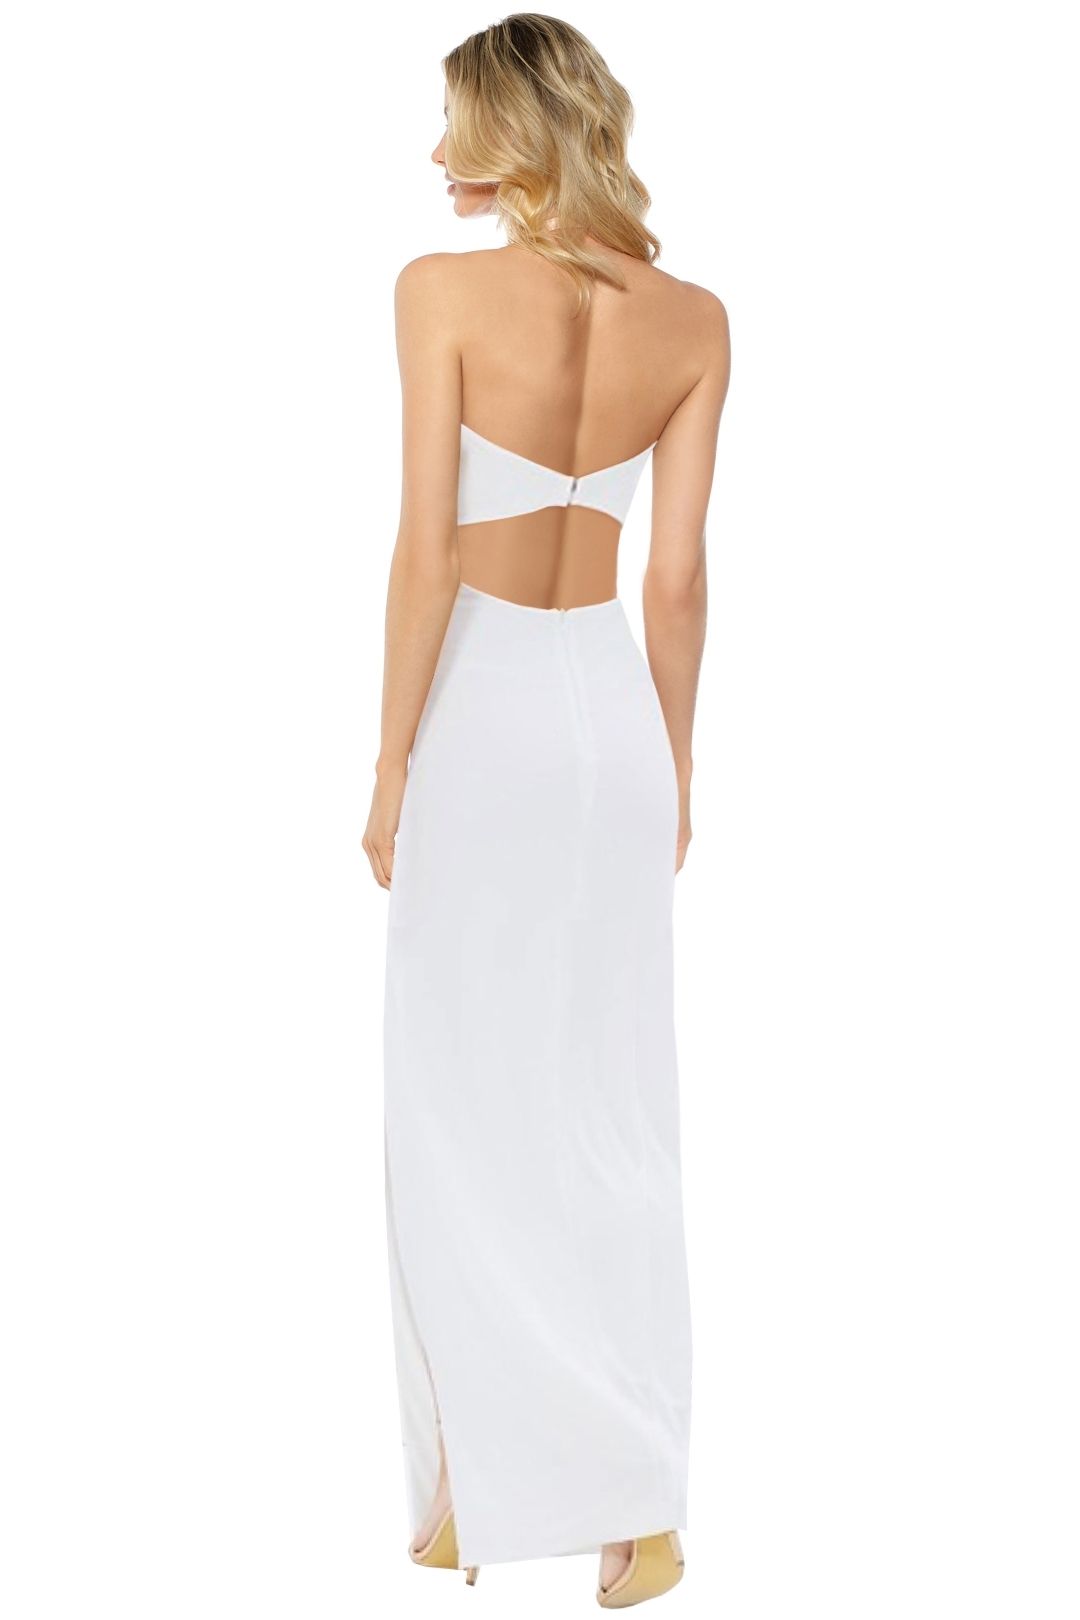 Skiva - Strapless  Evening Dress - White - Back